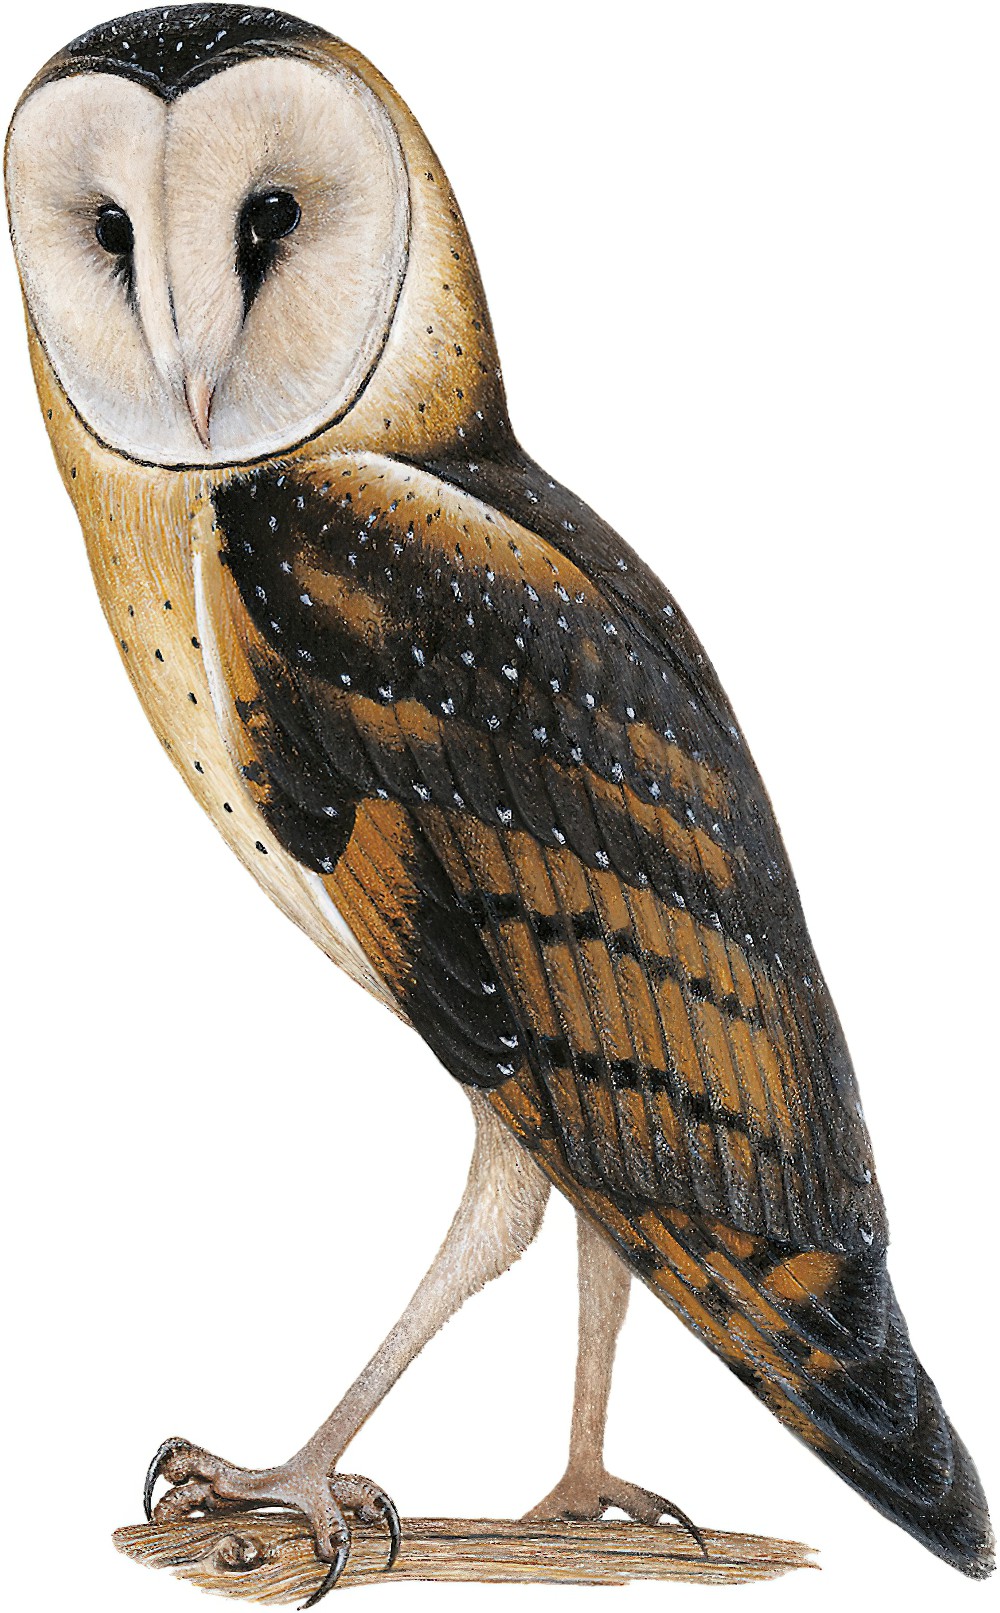 Australasian Grass-Owl / Tyto longimembris